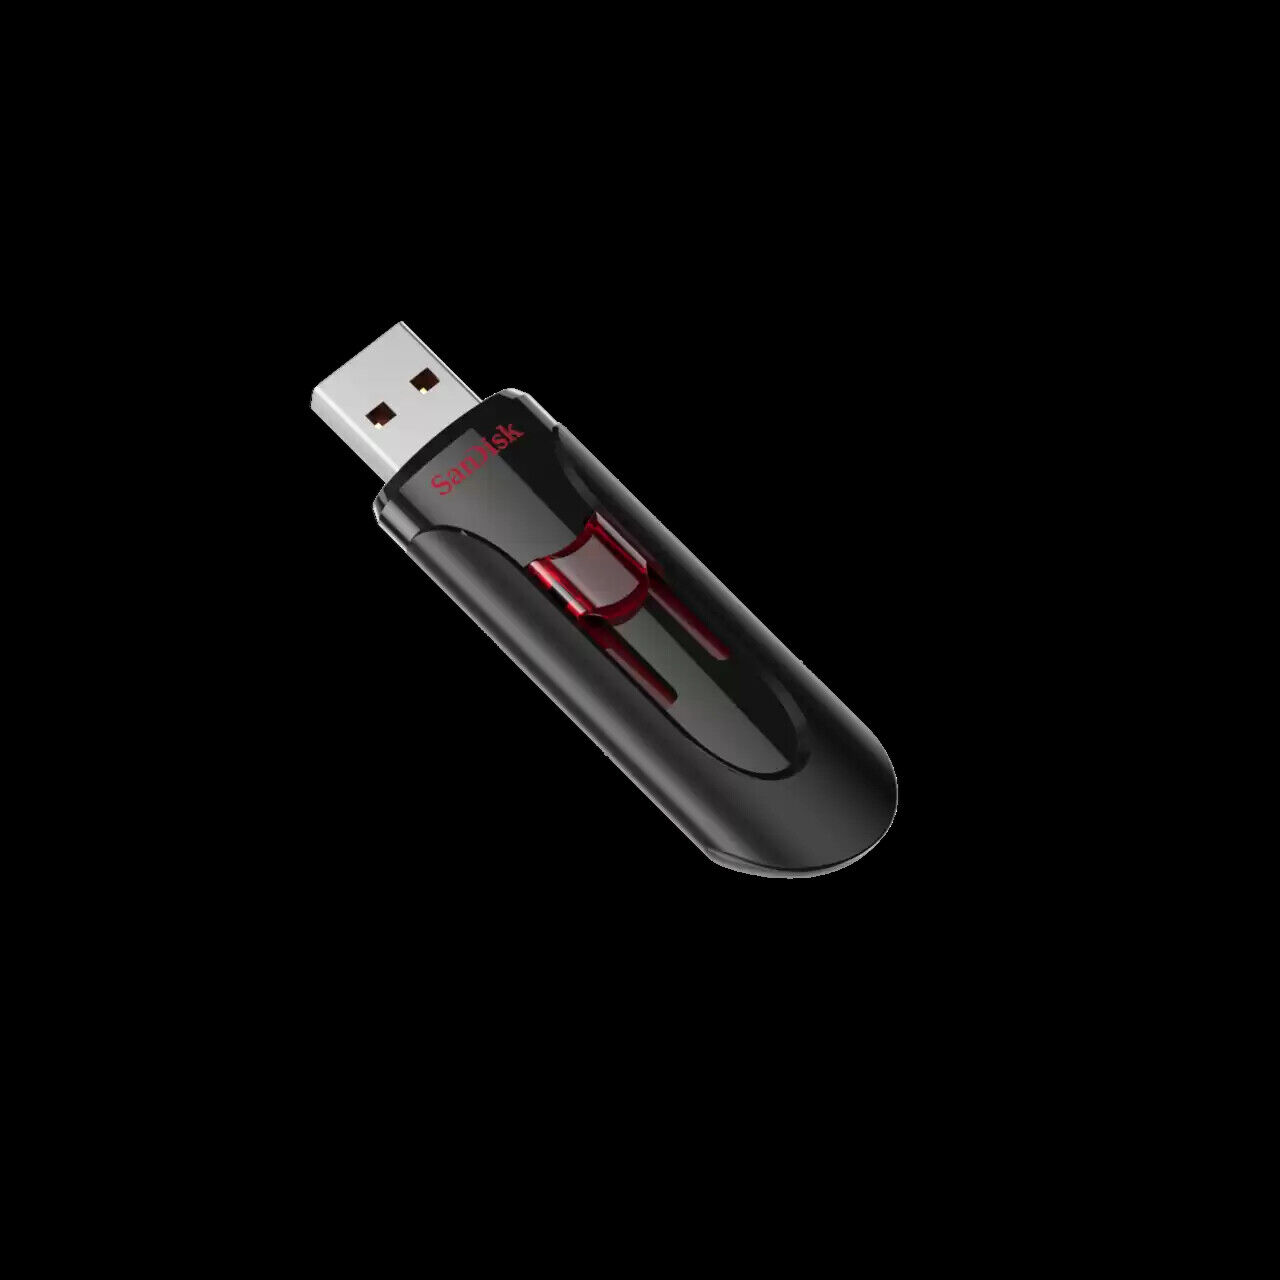 SanDisk 64GB Cruzer Glide USB 3.0 Flash Drive, Black - SDCZ600-064G-G35